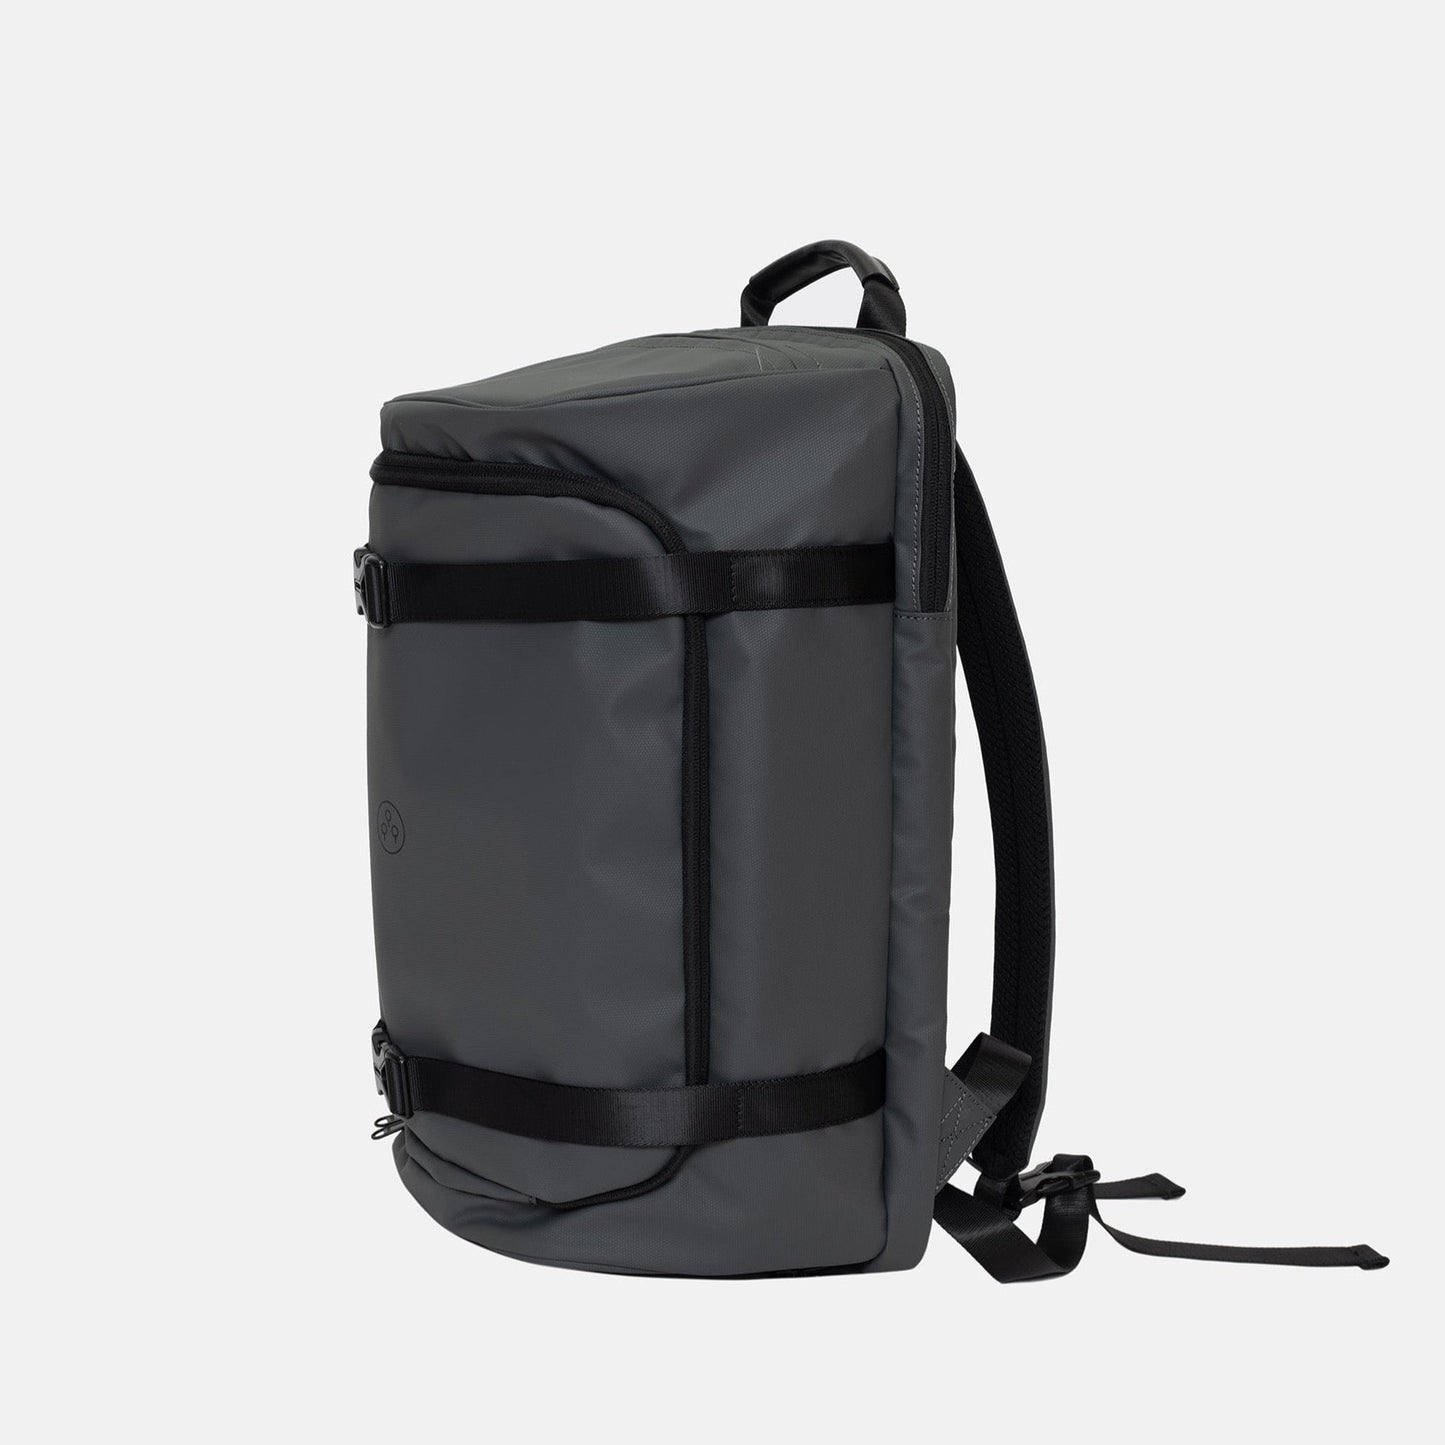 KIWEE Daily Backpack - Mineral Grey